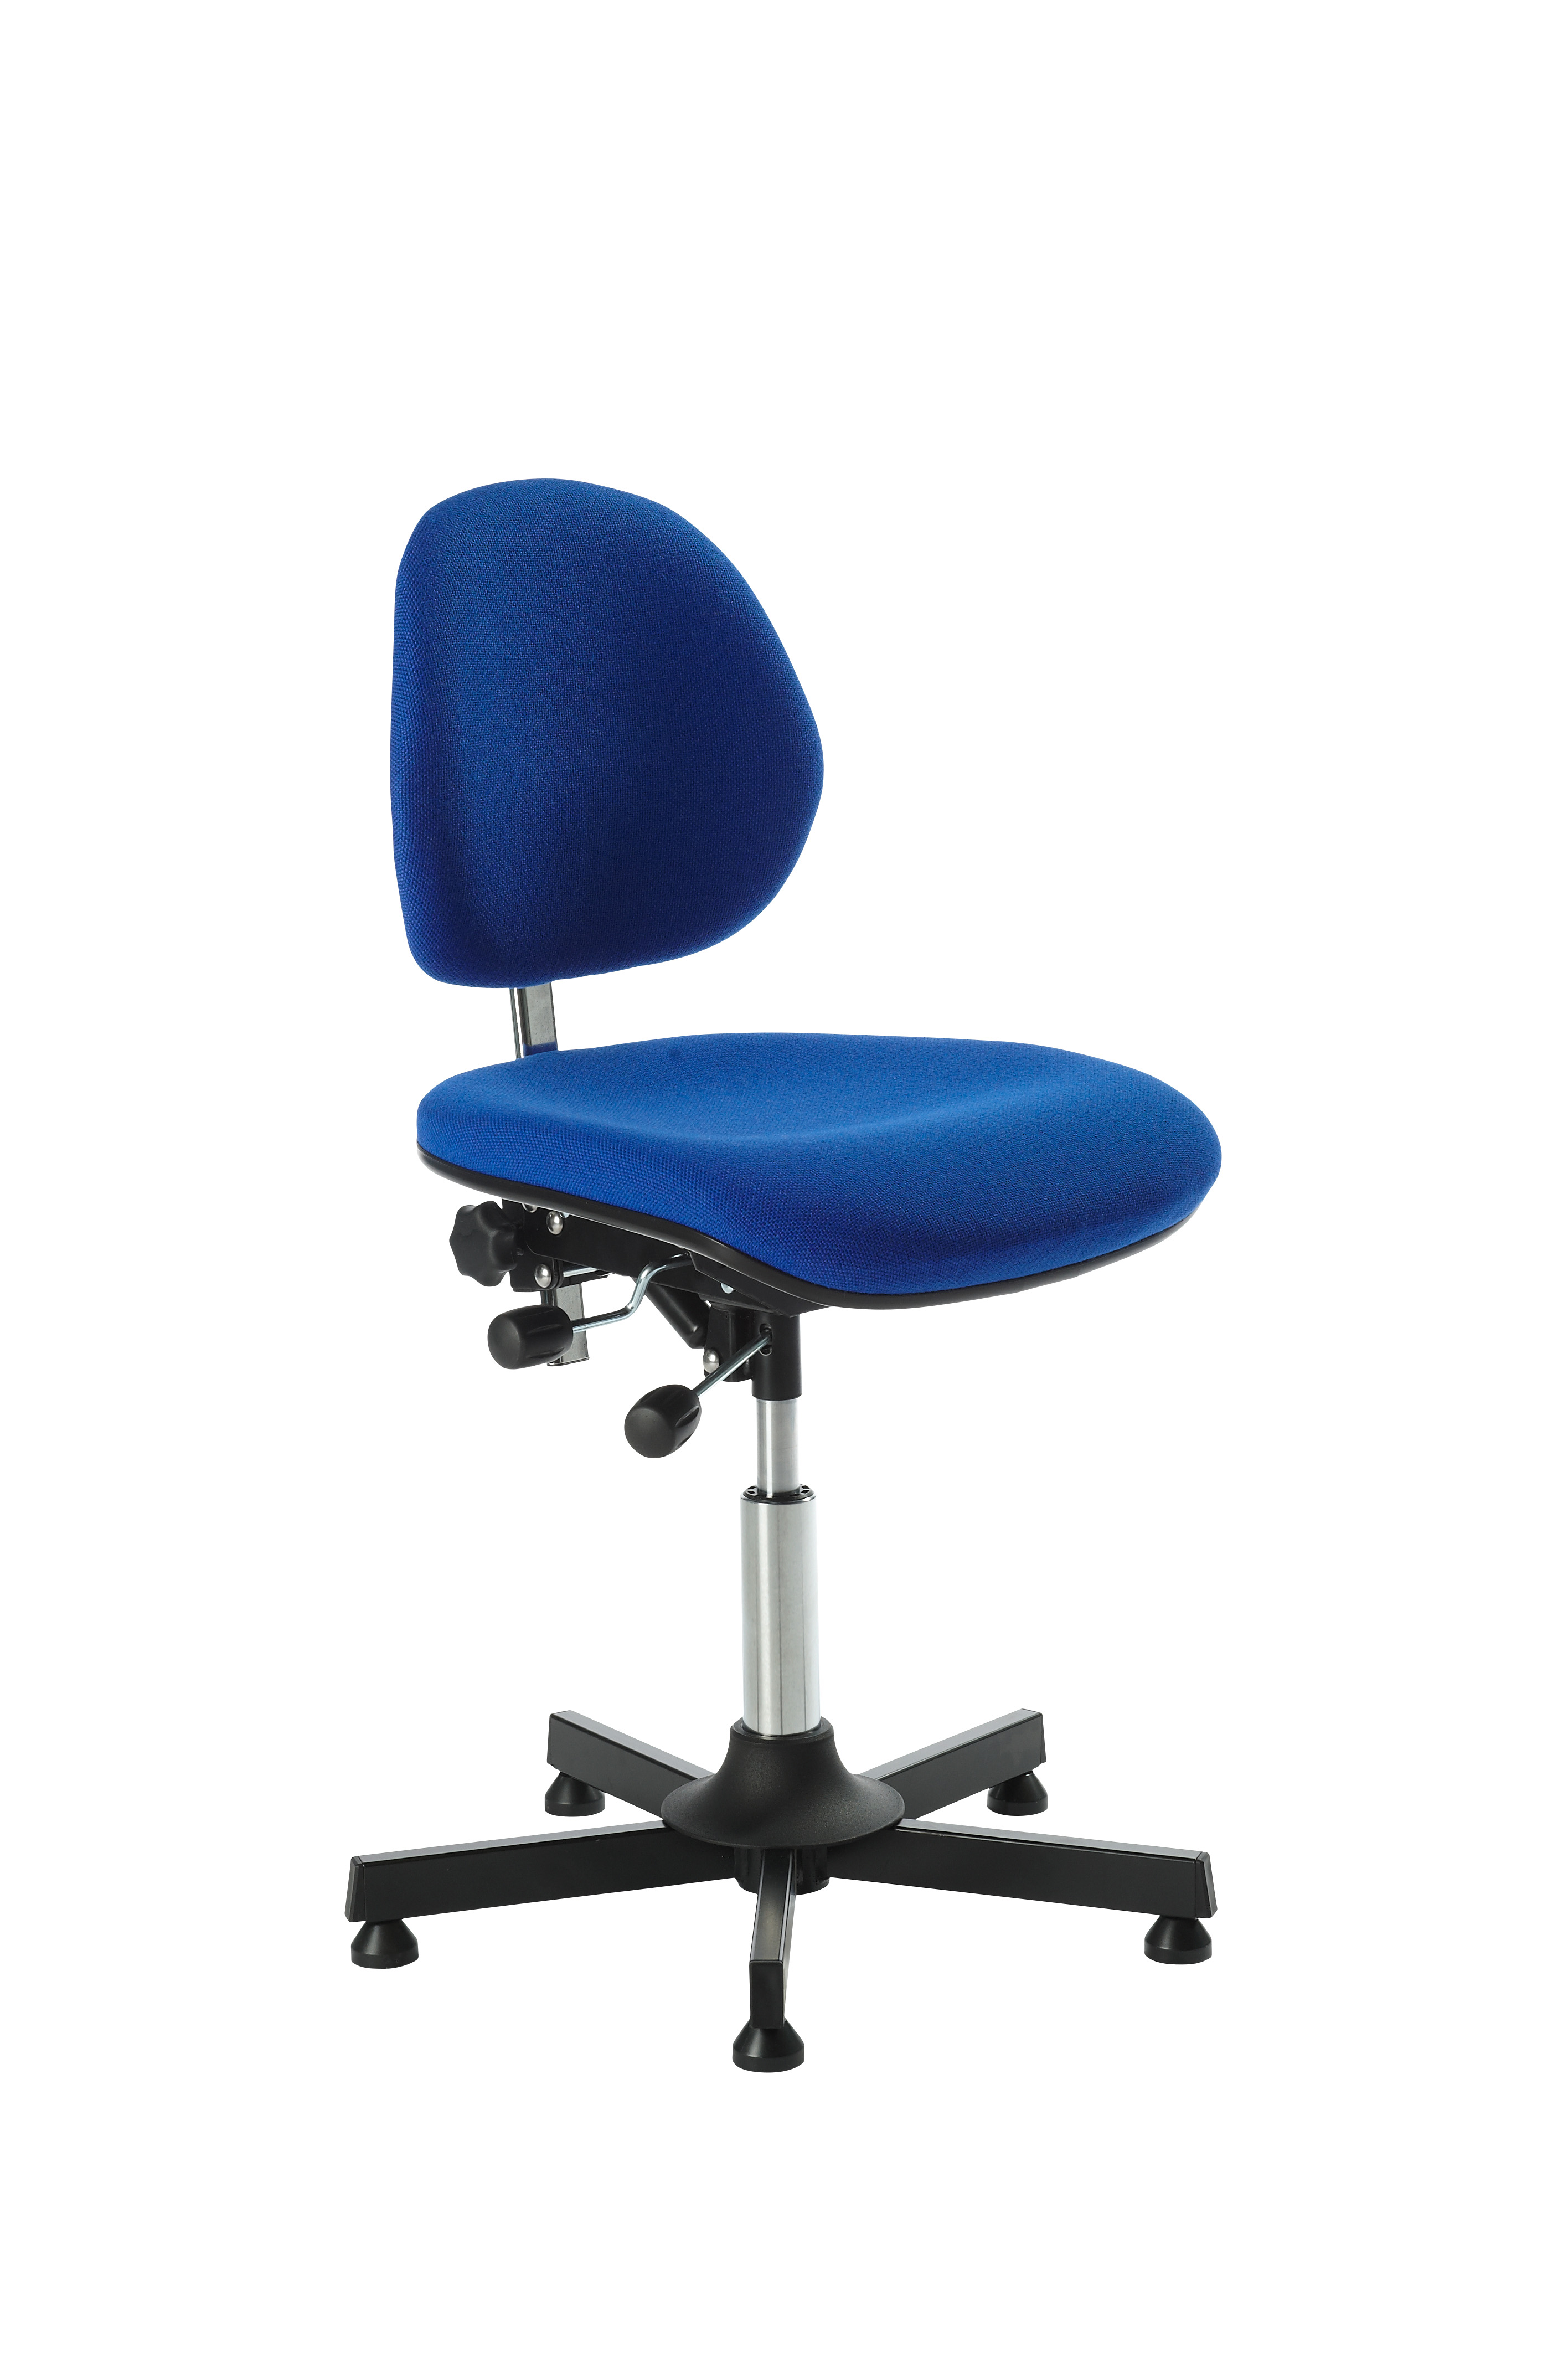 Bott Industrial Chair Adjustable Height 460-590mm - 88601012